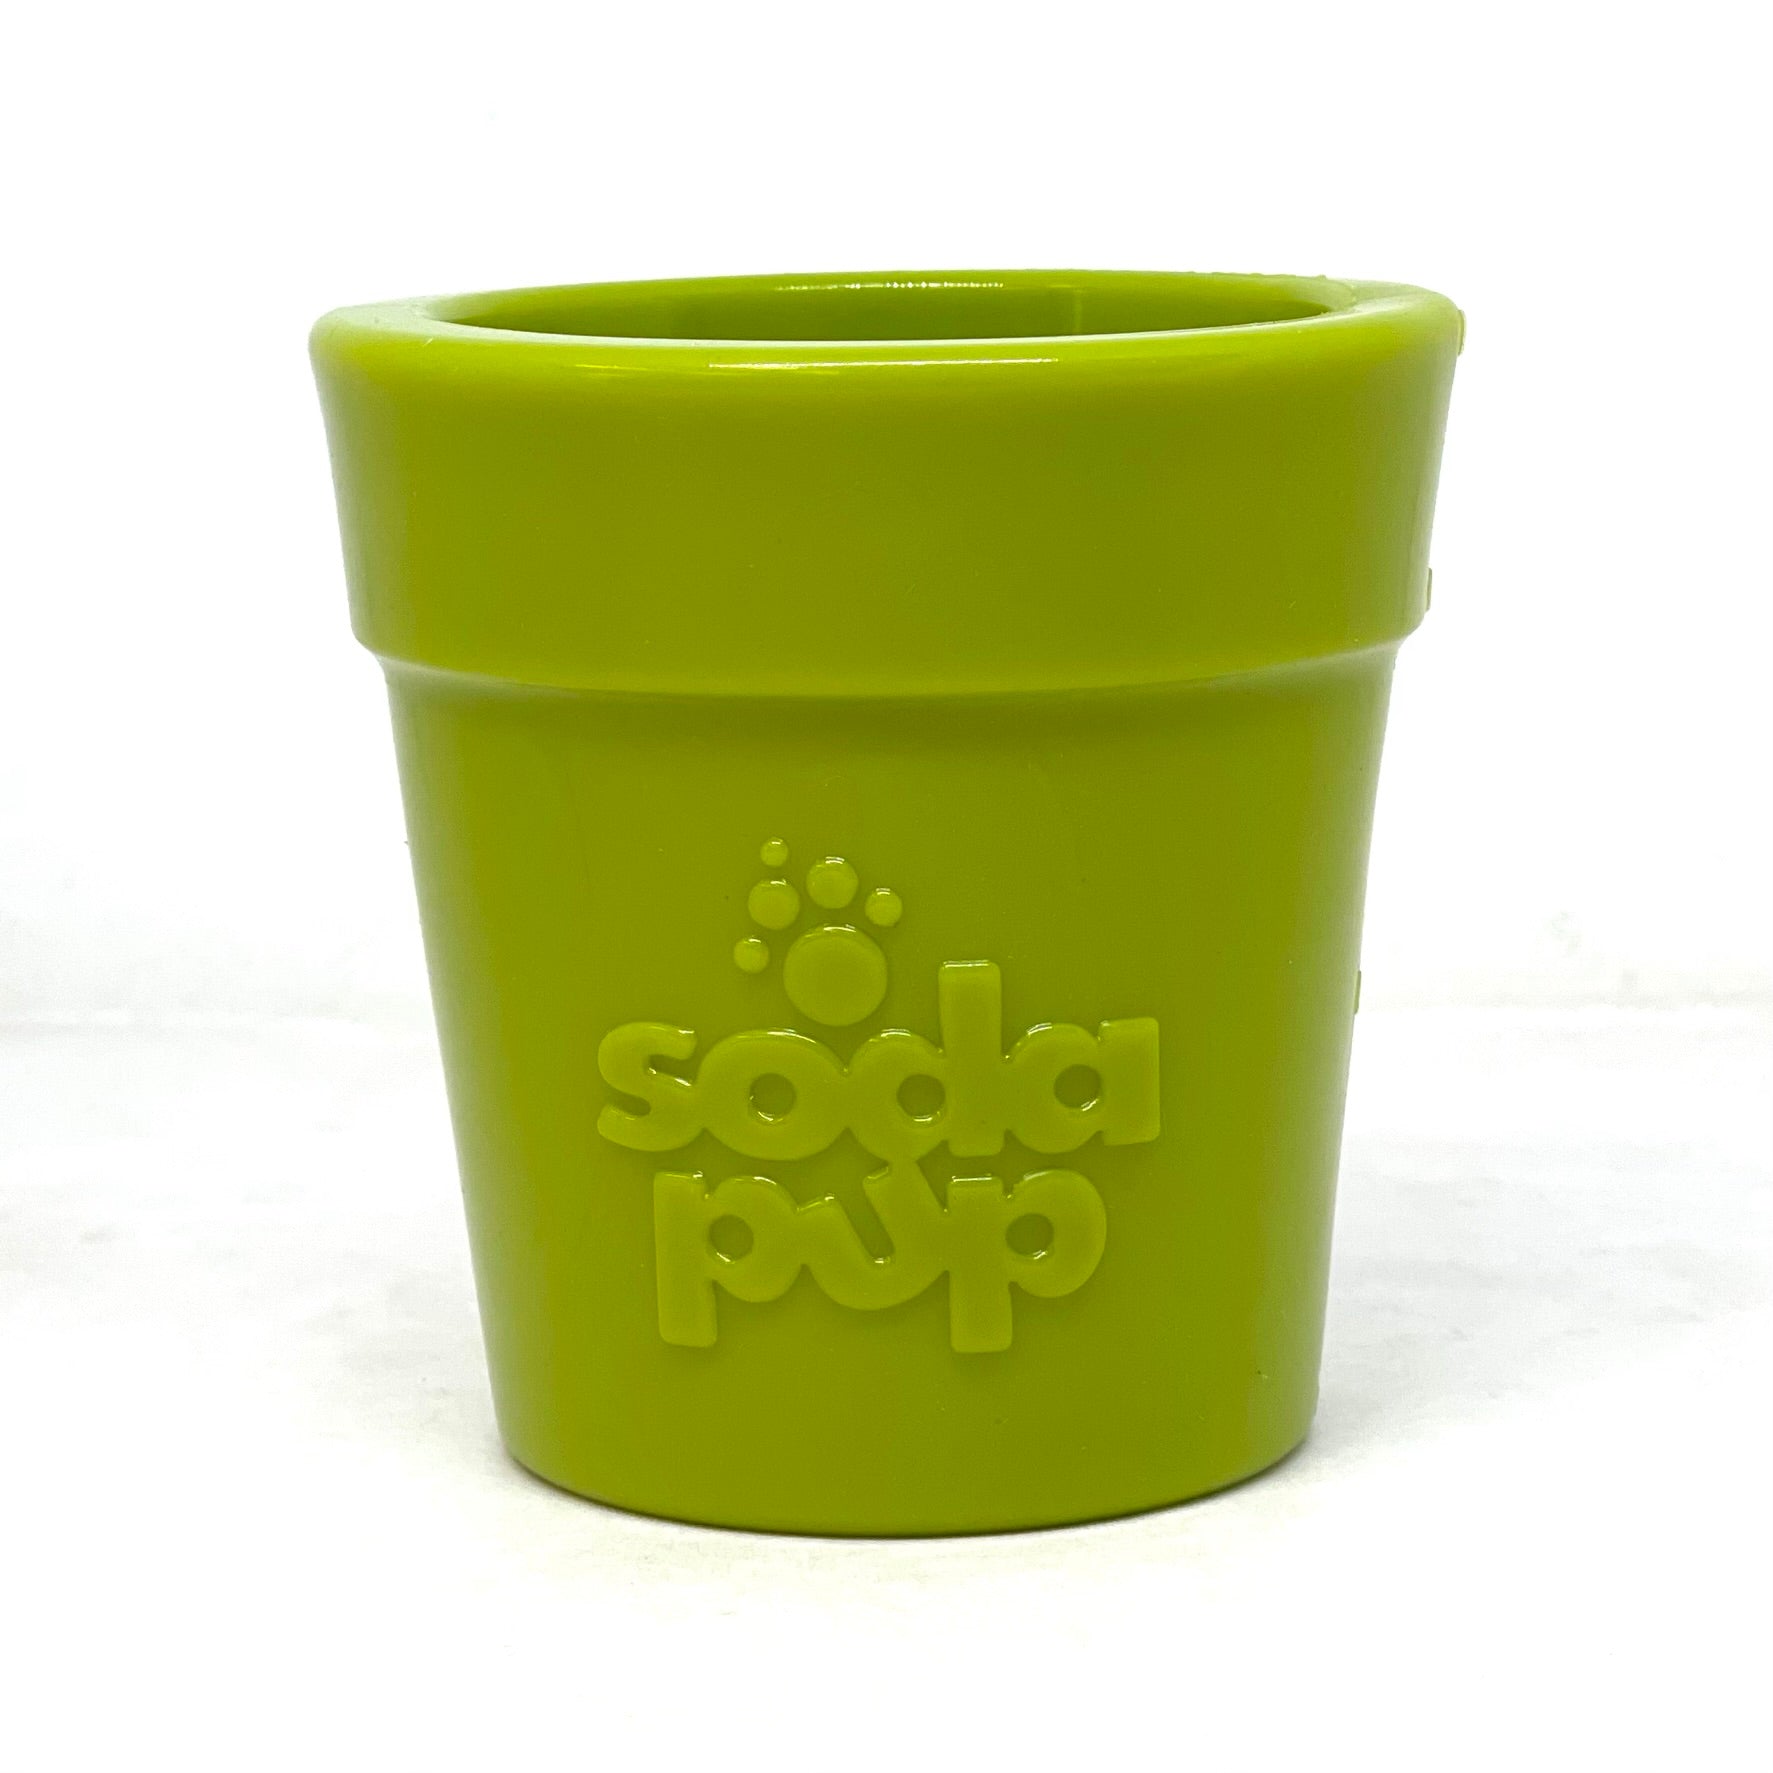 Sodapup flower pot slow feeder bowl